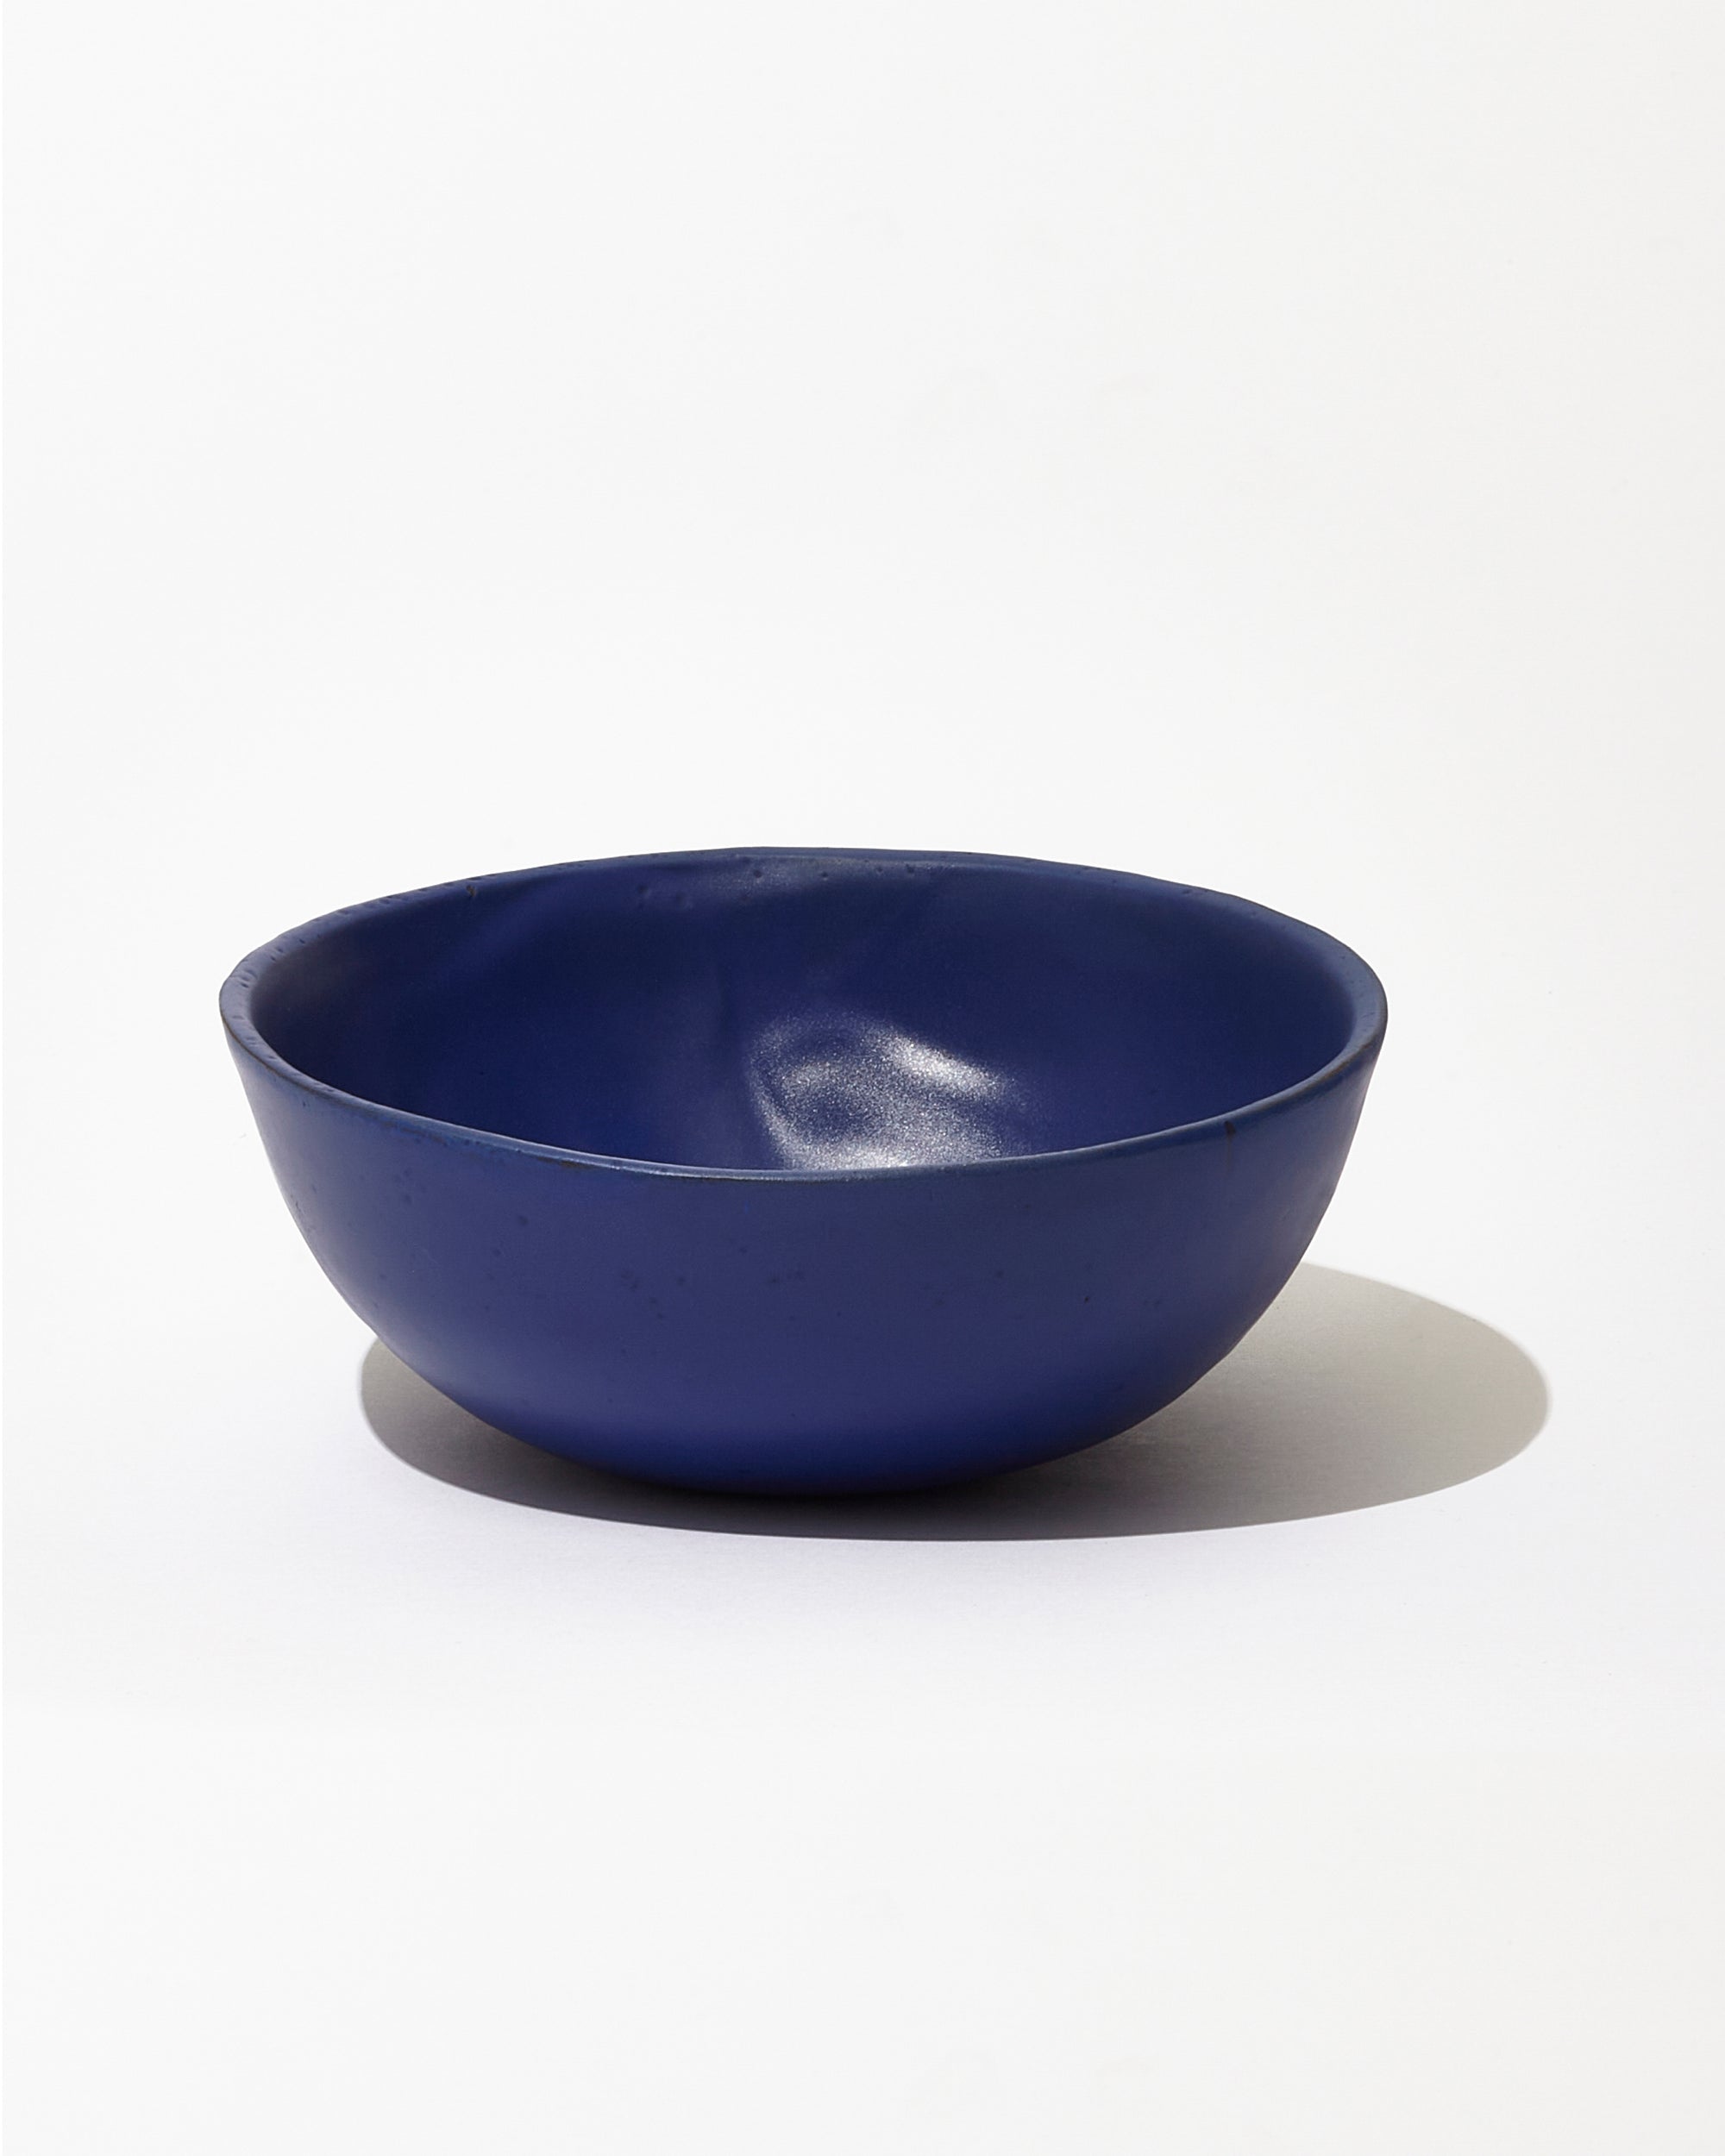 the medium bowl